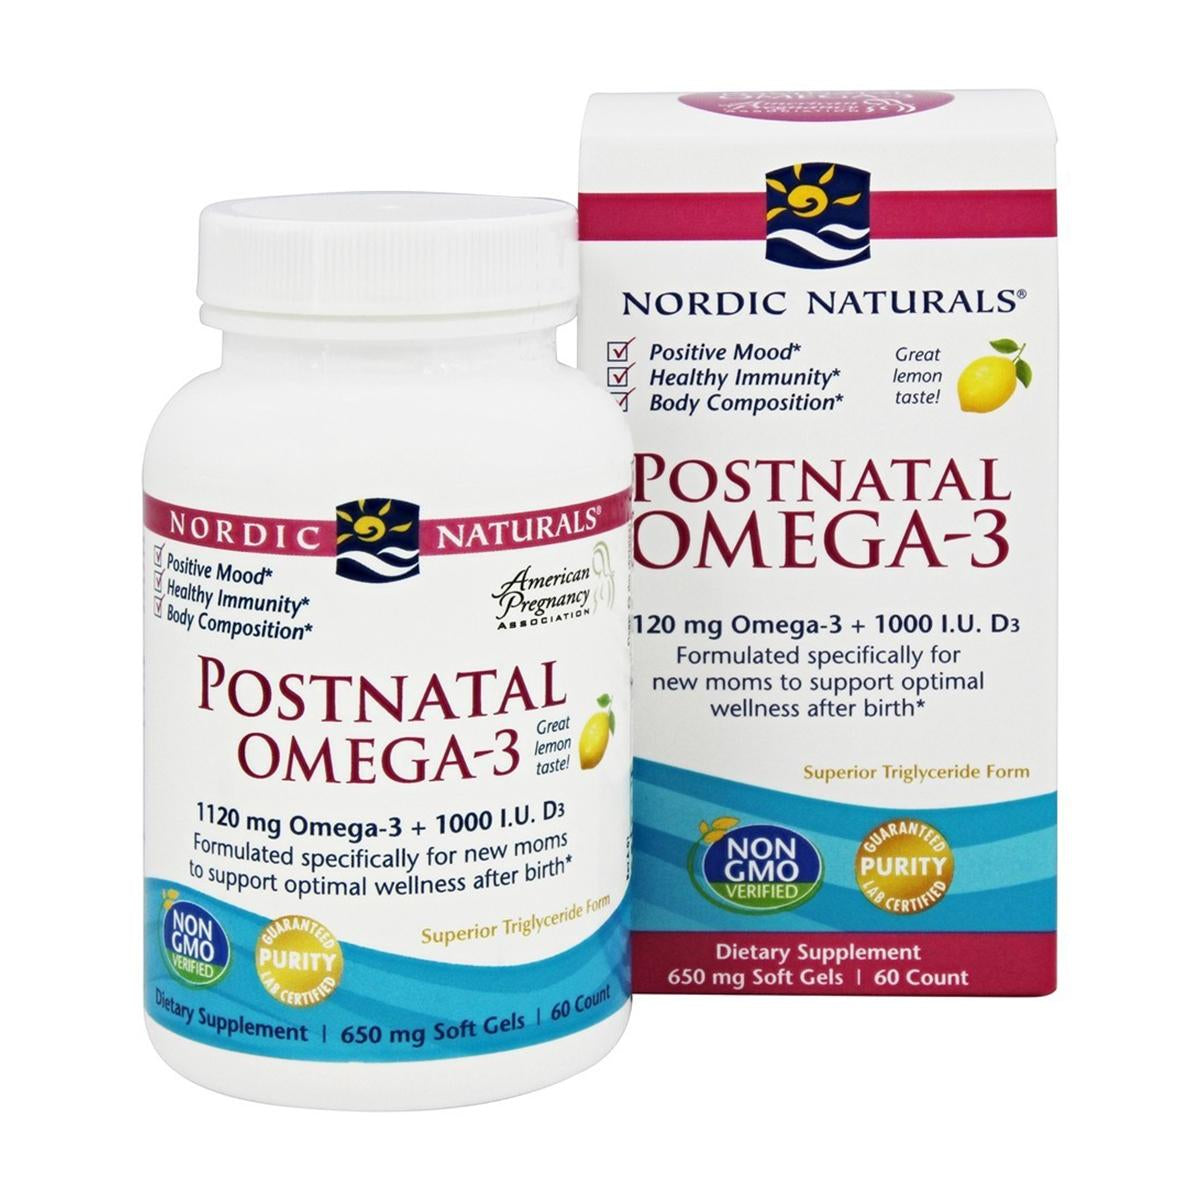 Primary image of Postnatal Omega-3